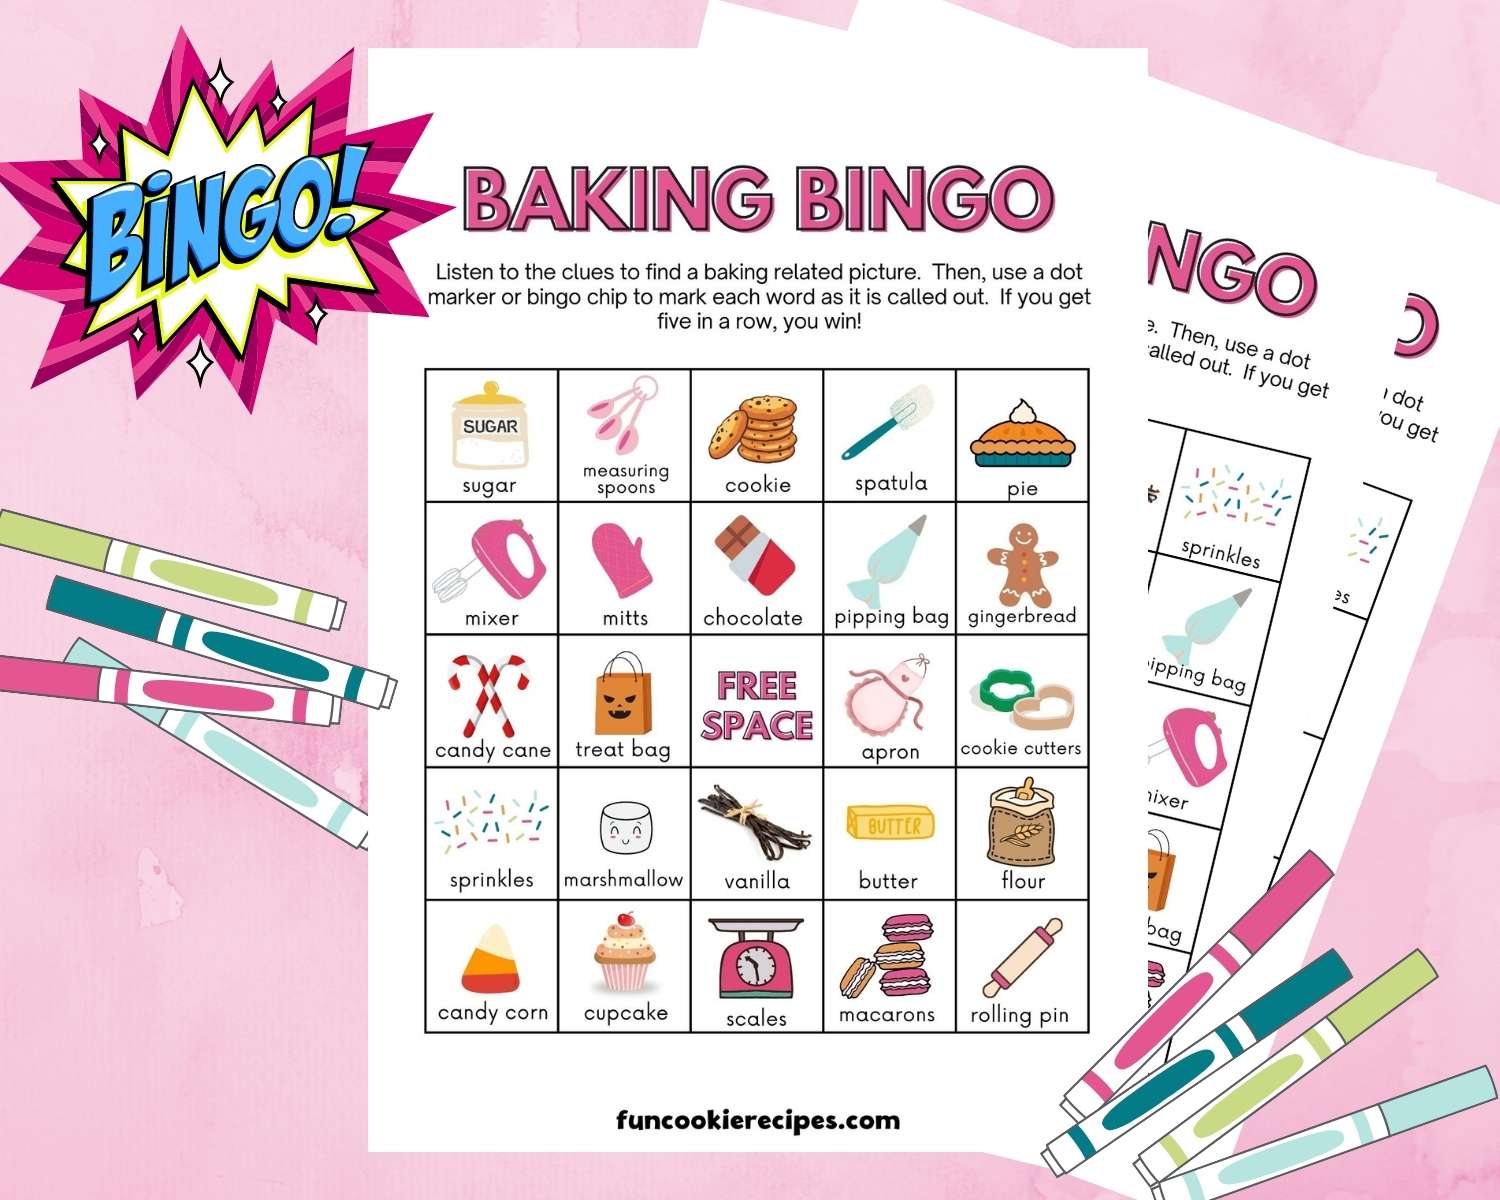 Baking bingo cards and bingo markers